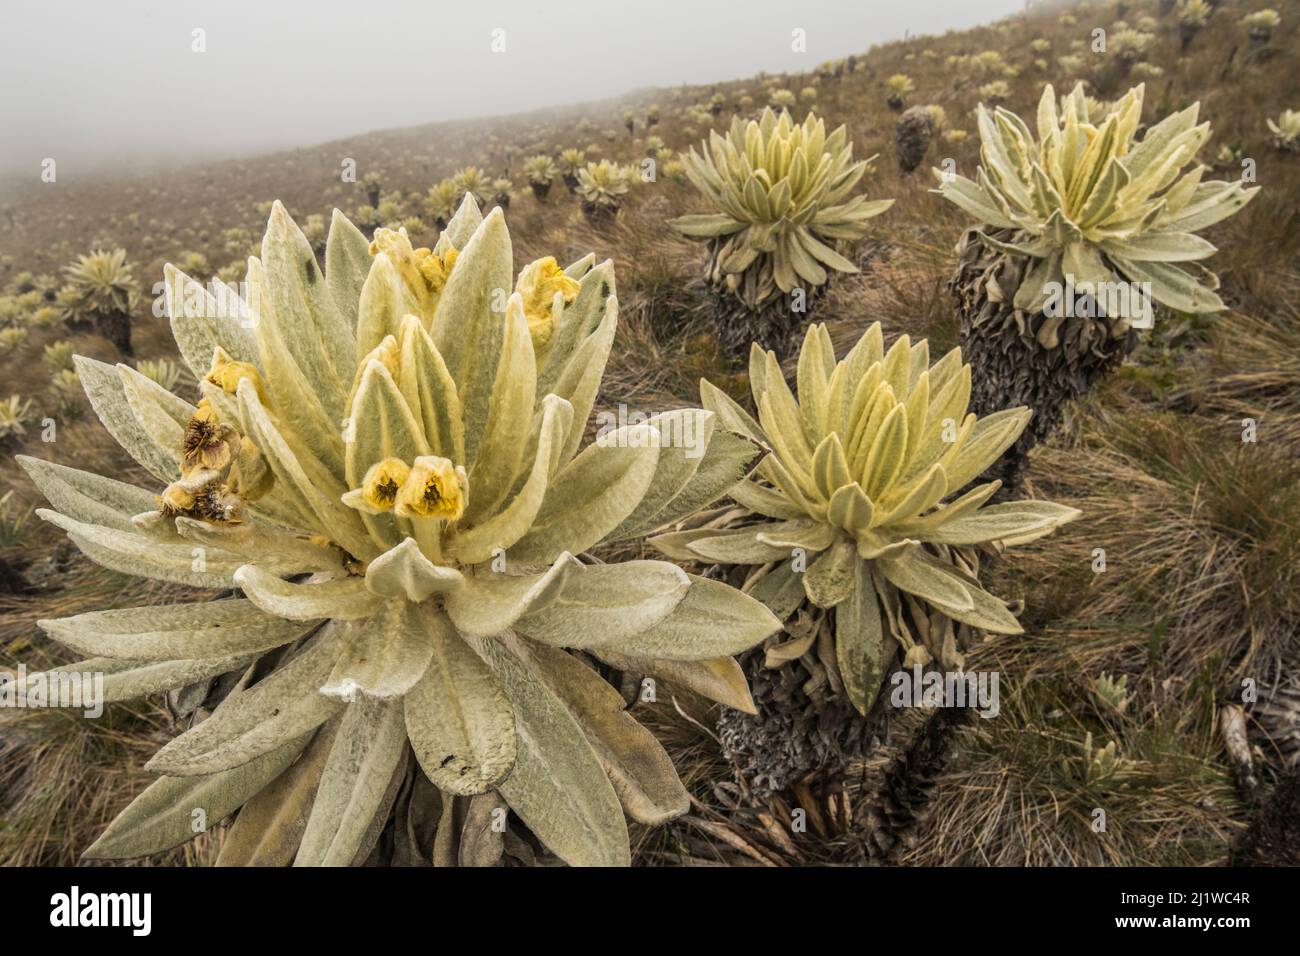 Field of Paramo flower / Frailejones (Espeletia pycnophylla), highland paramo, northern Ecuador. Stock Photo